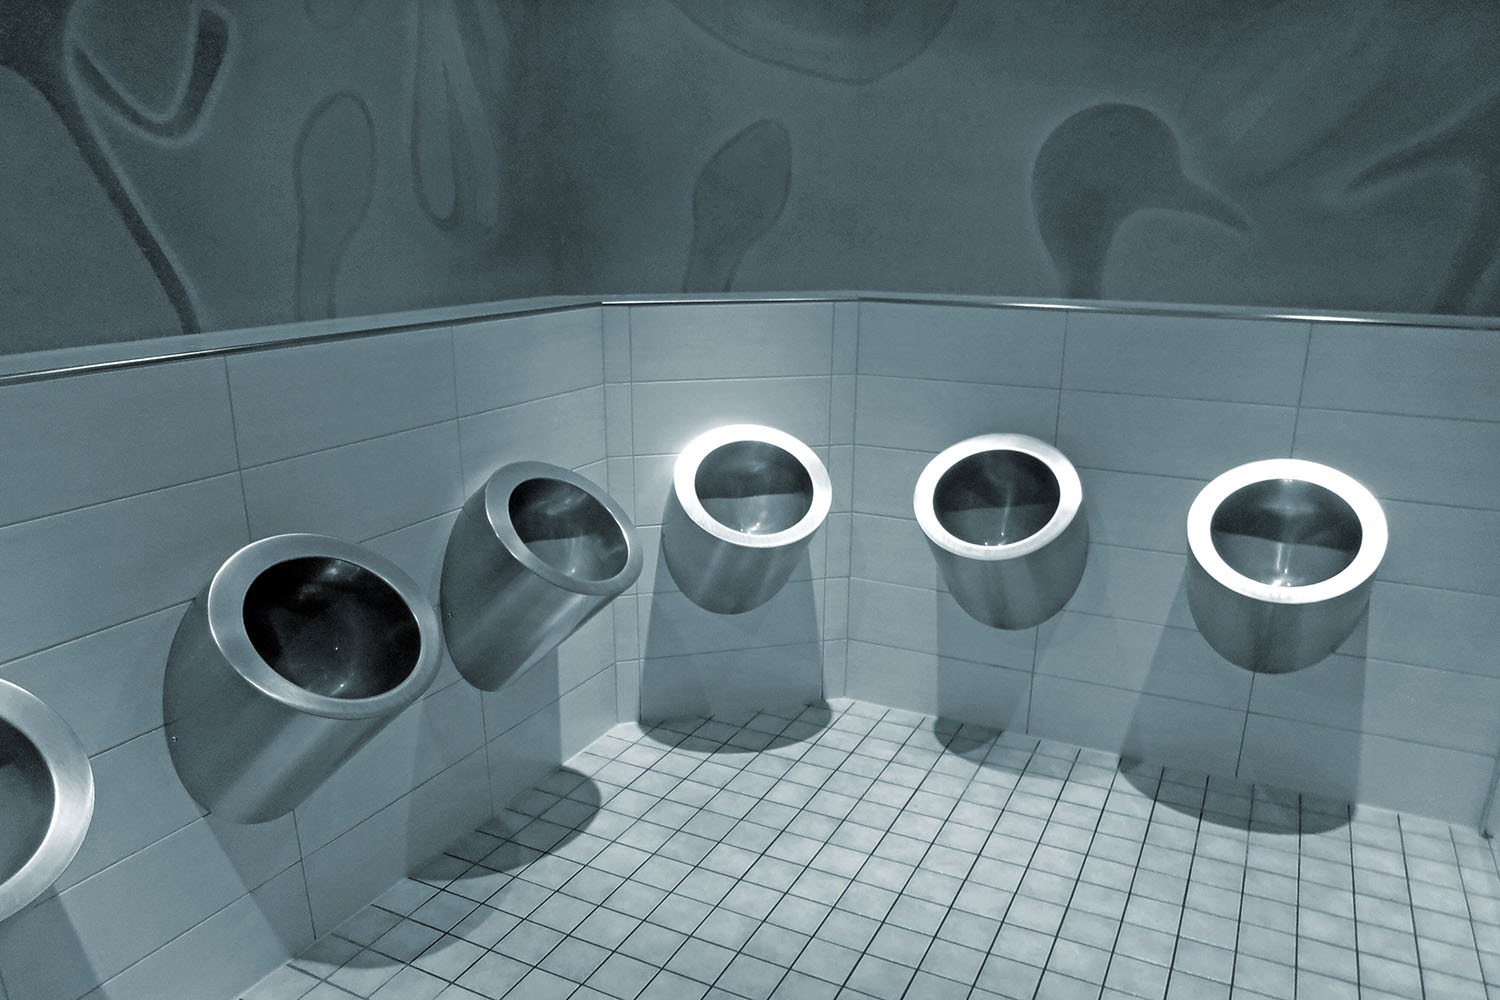 The ultra-modern men's restroom designed by Helmut Jahn in the Sony Center in Berlin